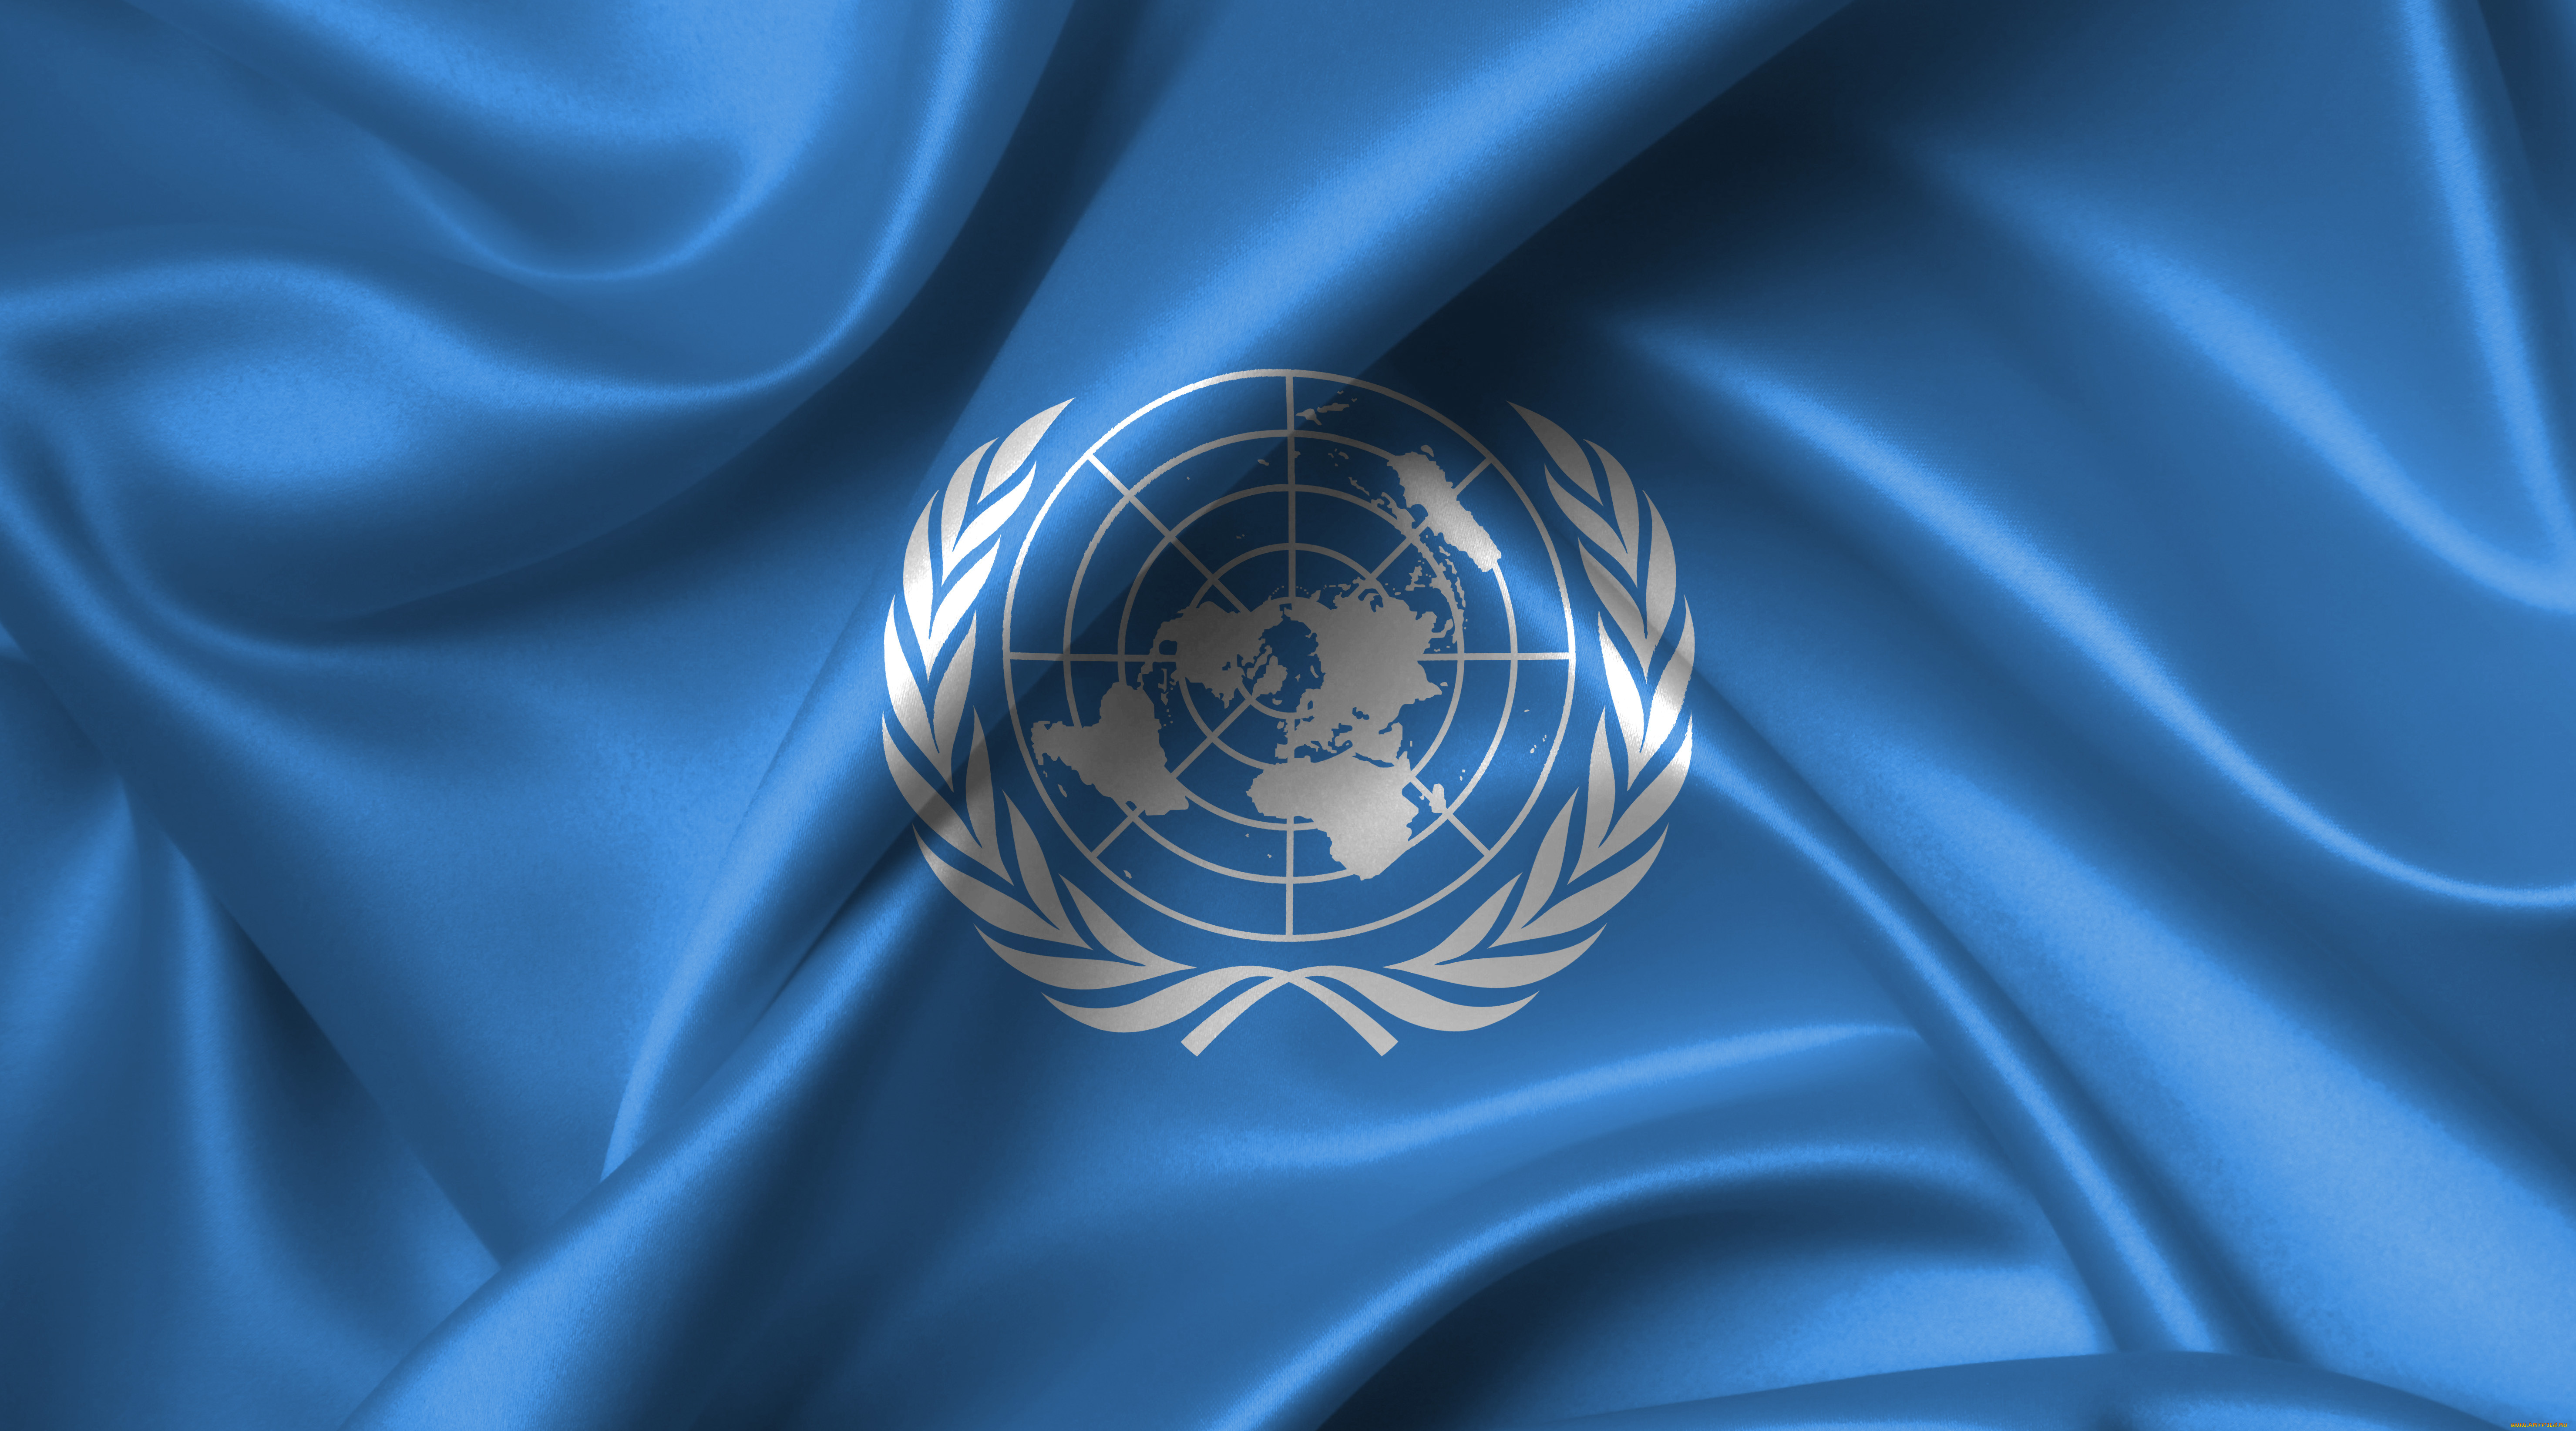 Международные организации оон. Флаг организации Объединенных наций. Организация Объединенных наций ООН флаг. Флаг ООН 3018. ООН это Конфедерация.